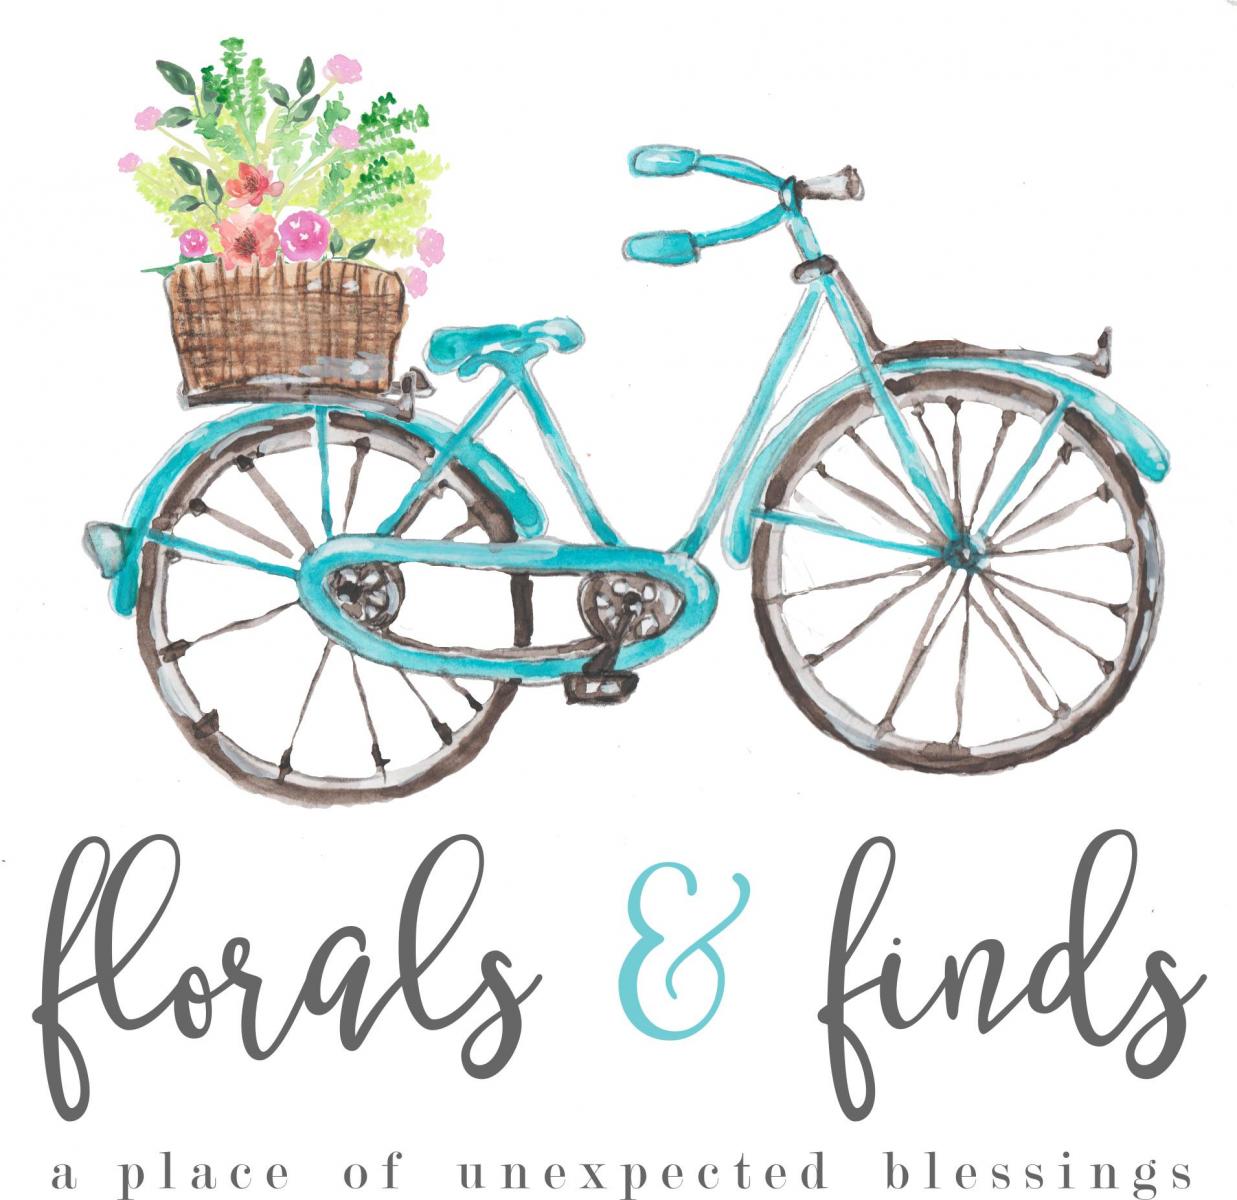 Florals & Finds's Image